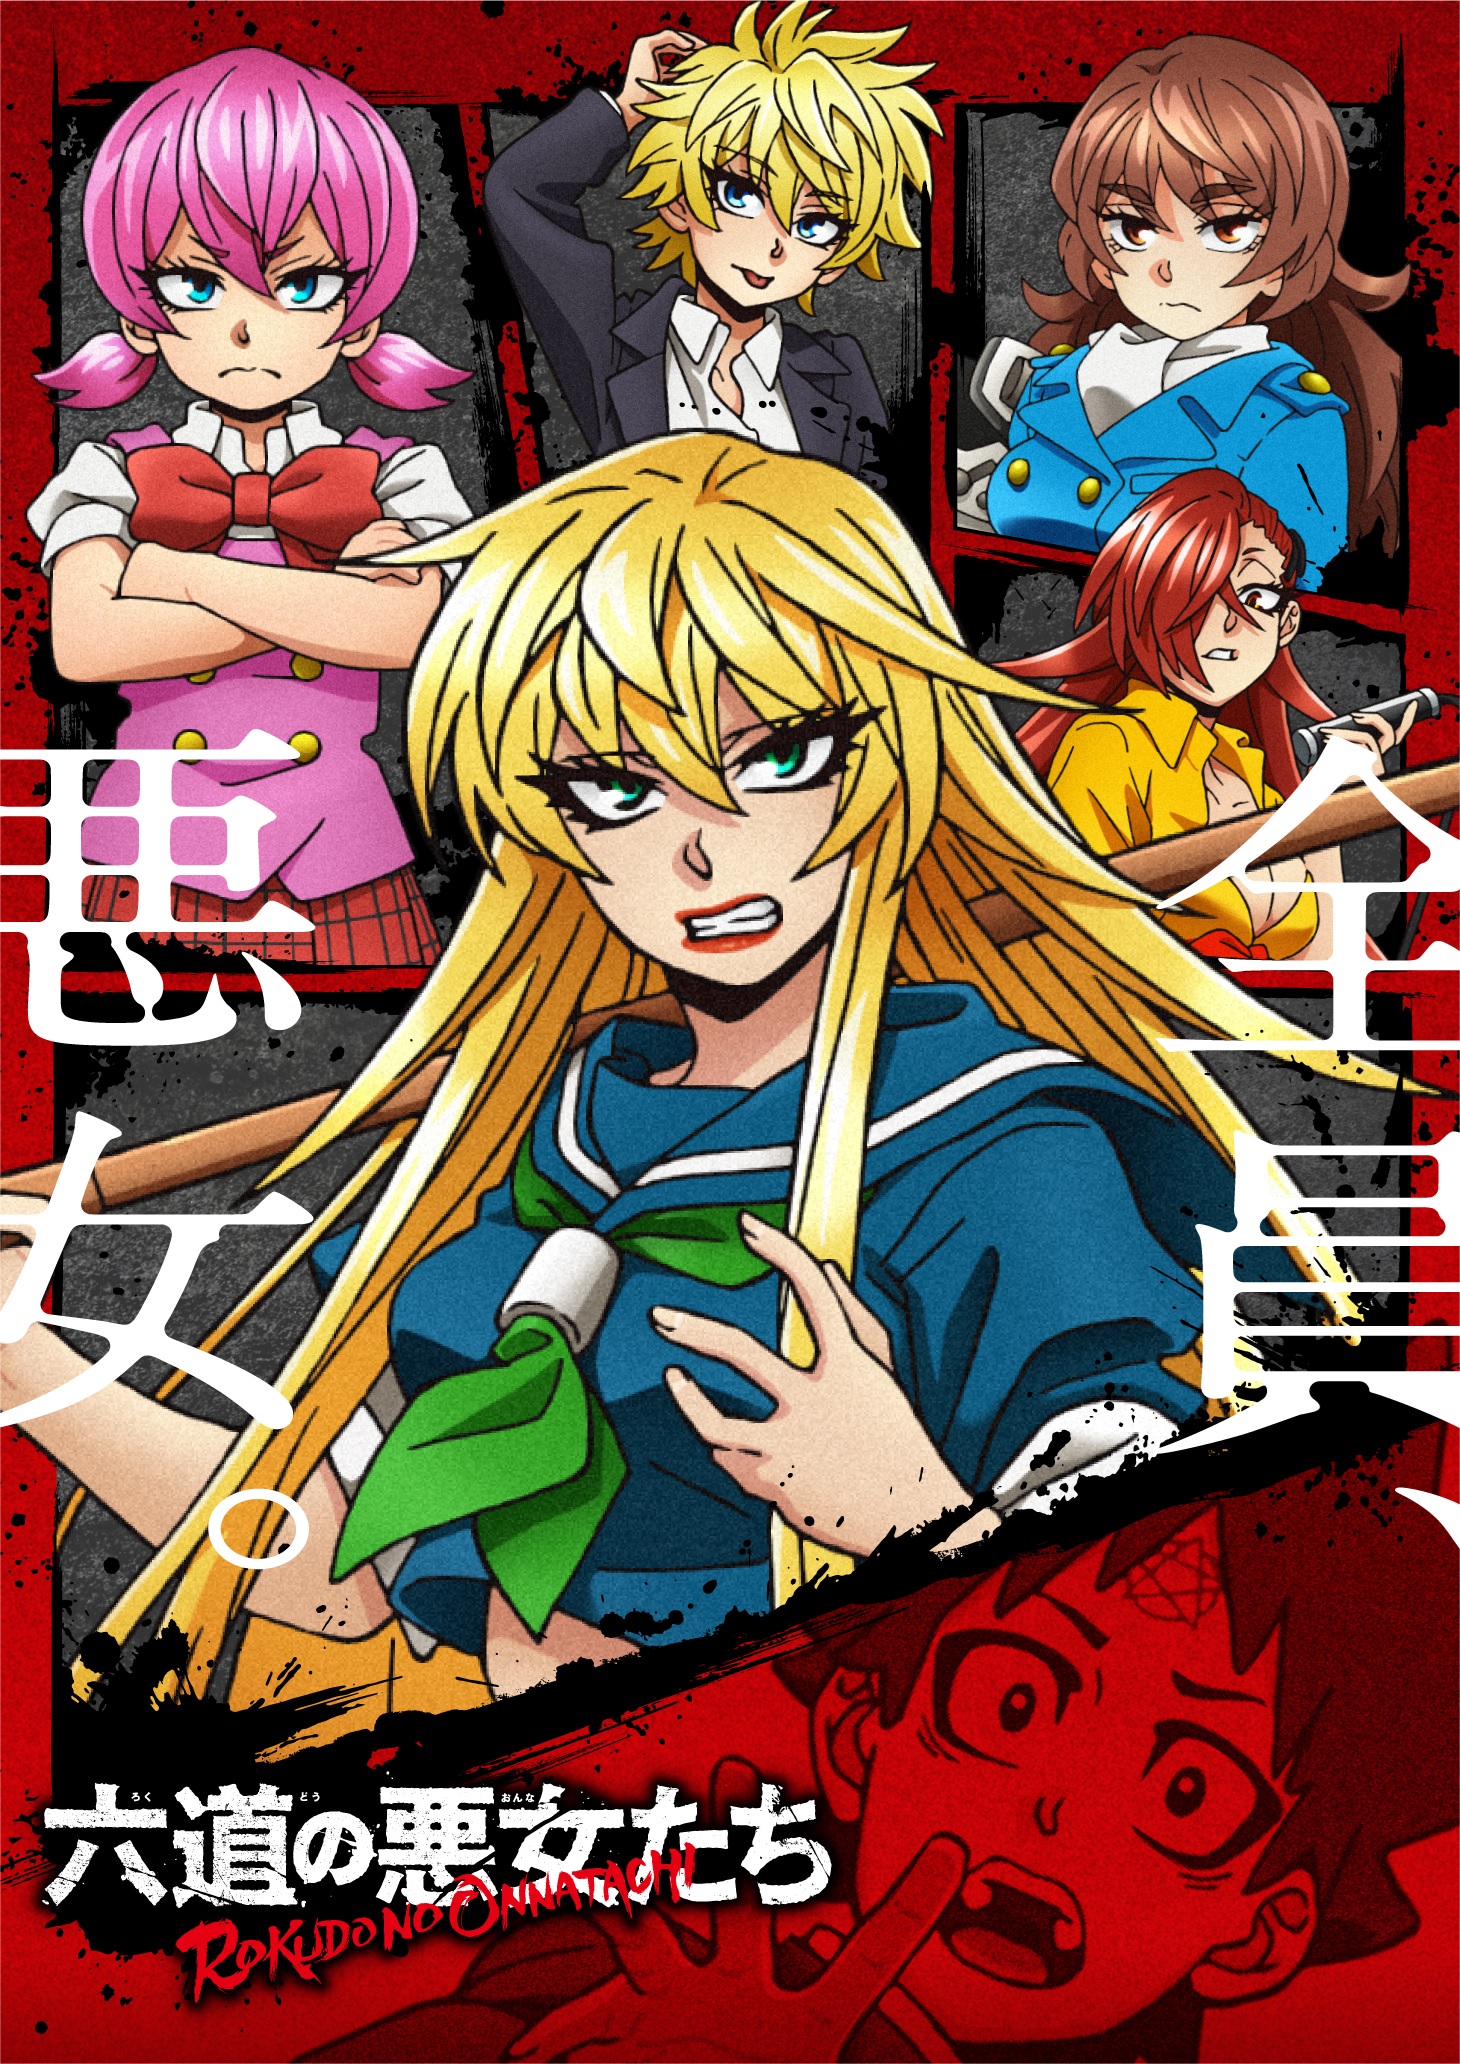 Imagen clave del anime Rokudou no Onna-tachi